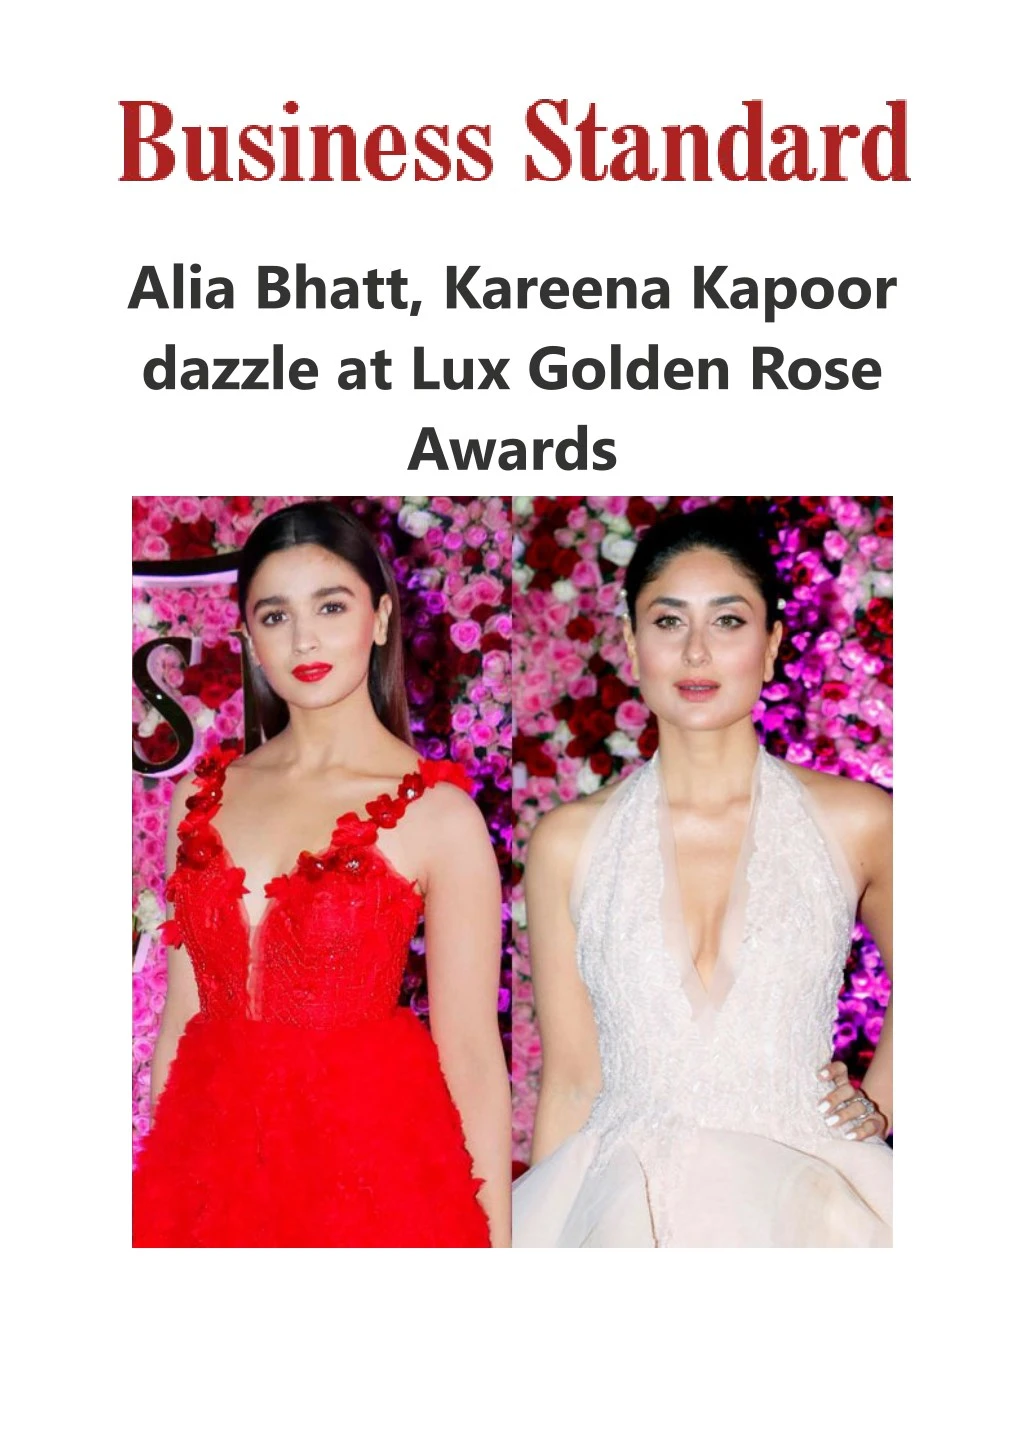 Alia Bhatt | Lux Golden Rose Awards 2018 : r/BollywoodFashion